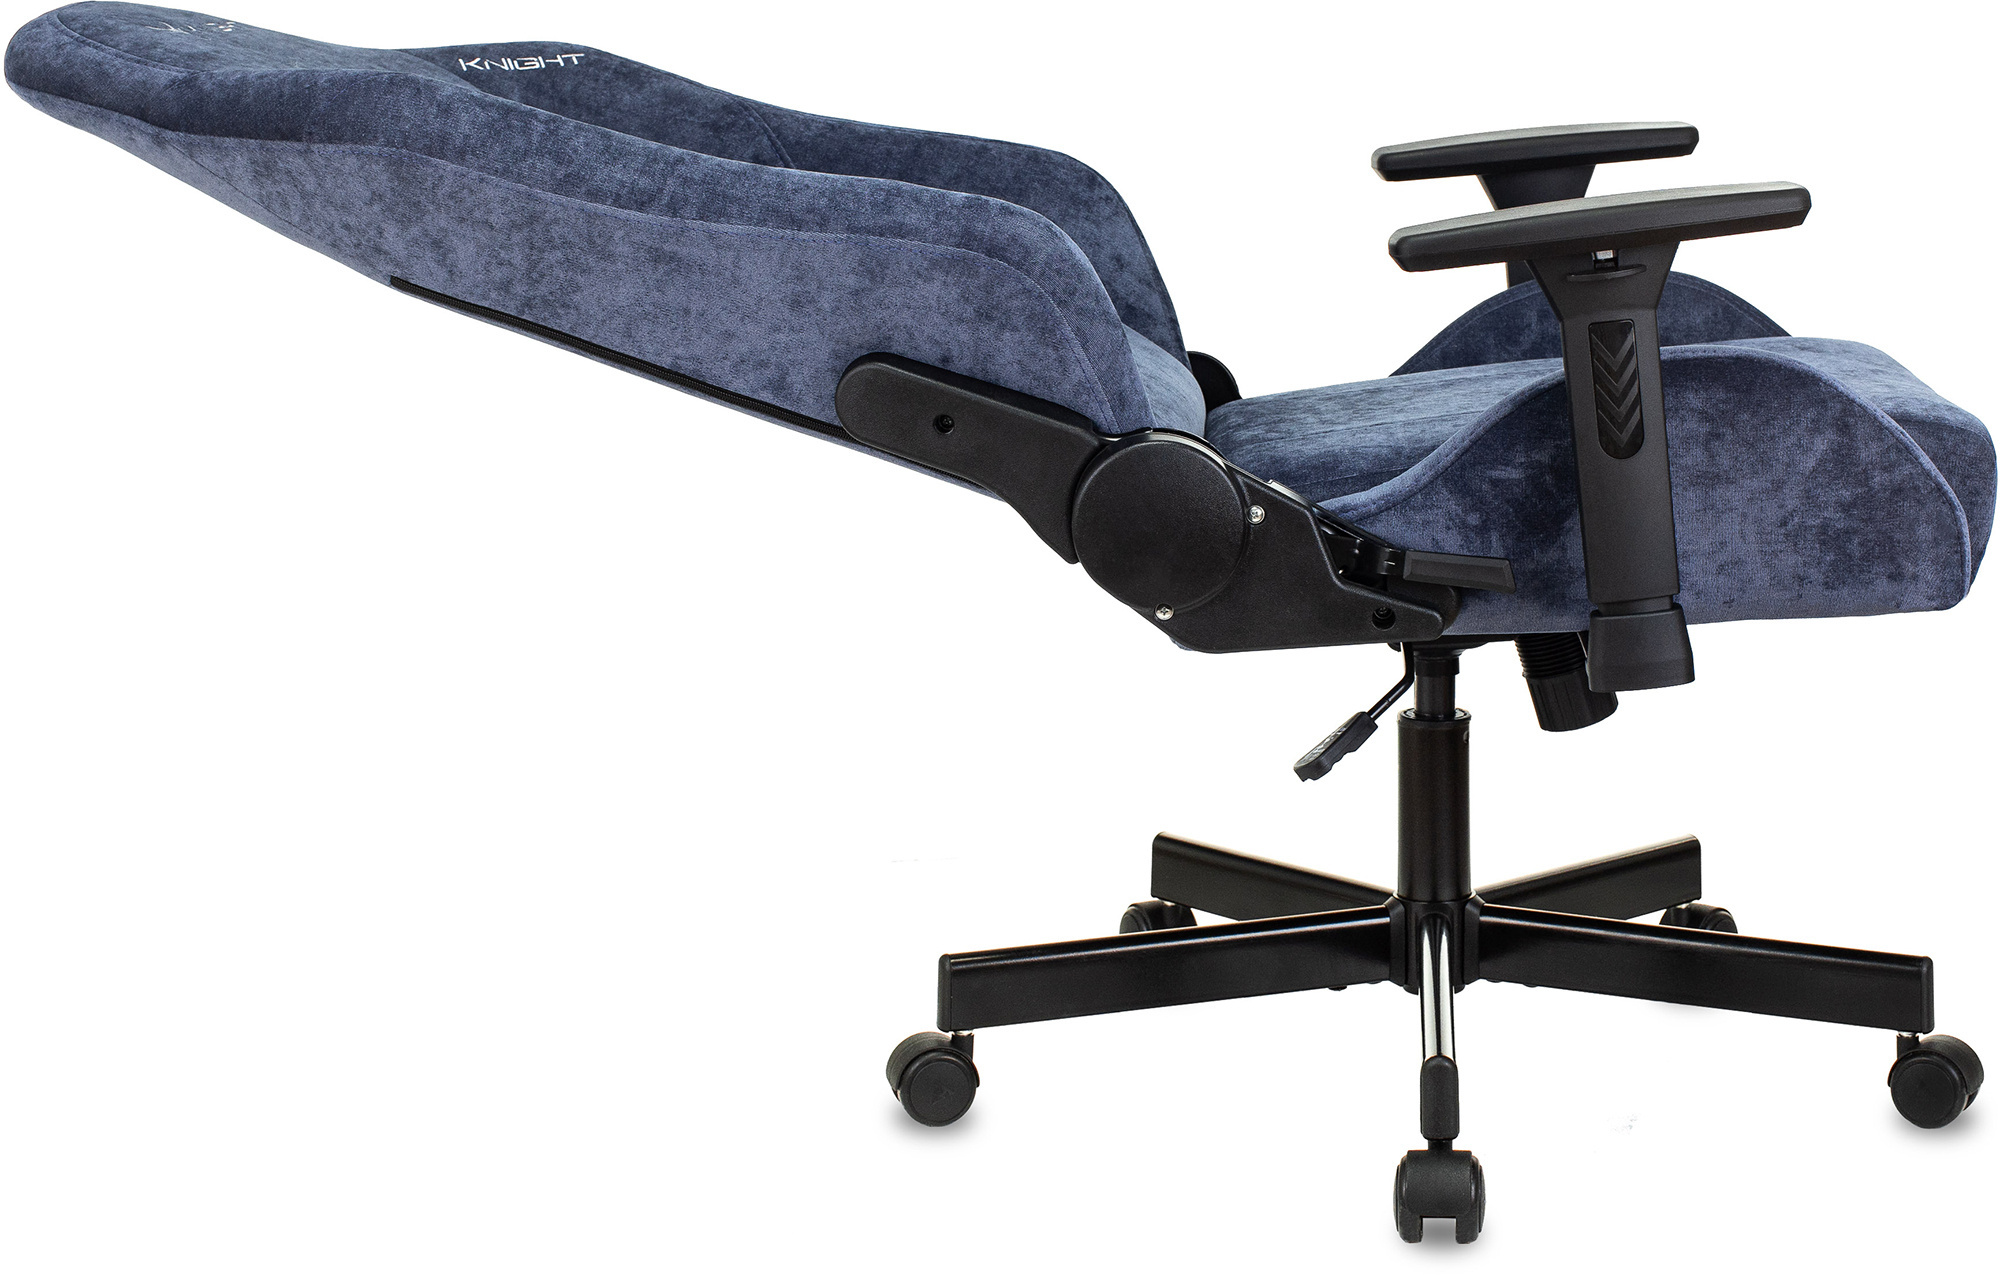 Кресло игровое Knight N1, обивка: ткань, цвет: синий (KNIGHT N1 BLUE) от магазина Buro.store